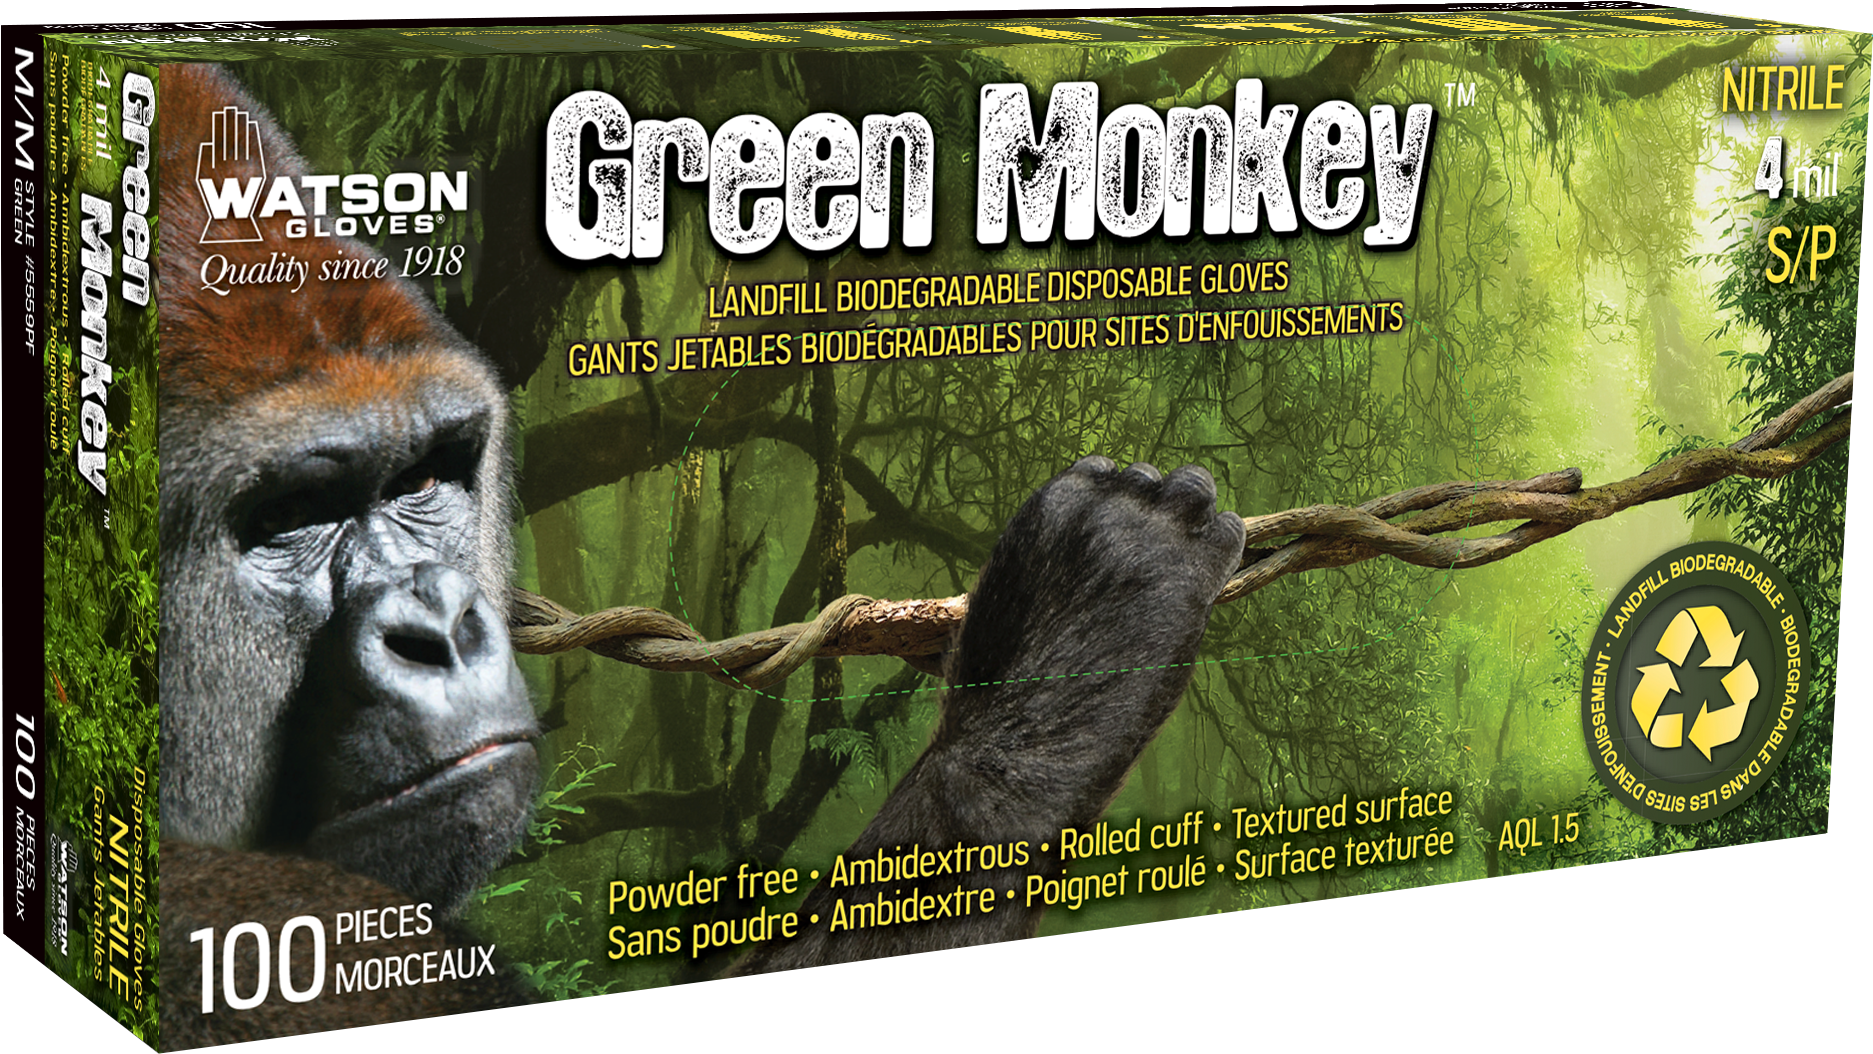 Green Monkey Biodegradable Gloves Packaging